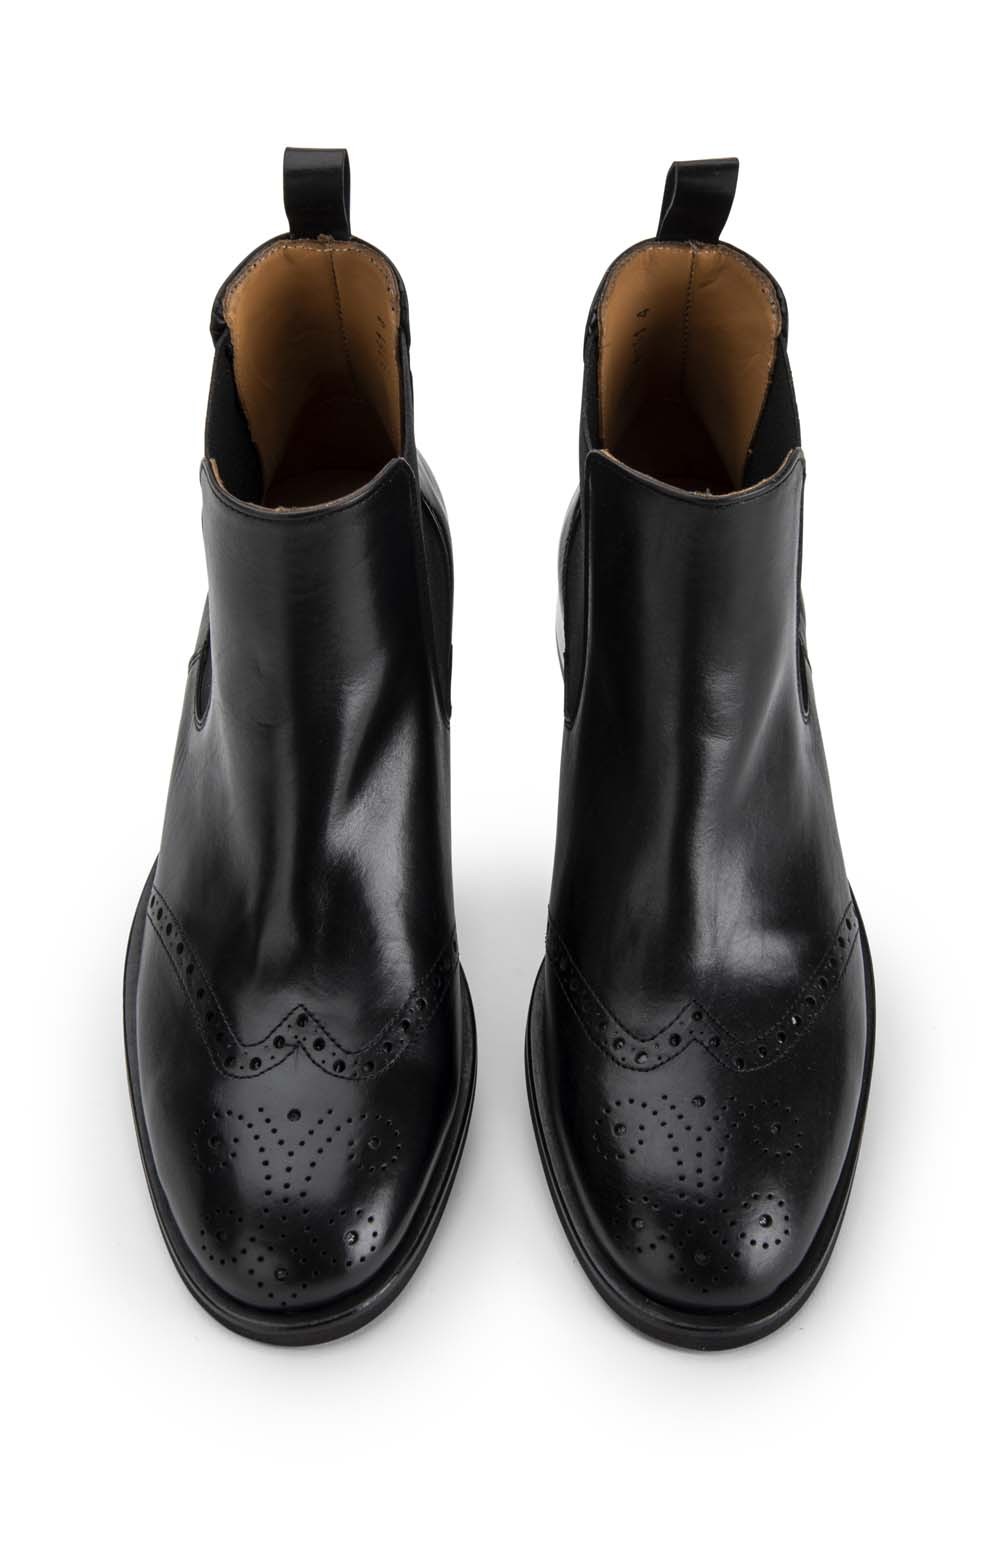 ladies black brogue boots